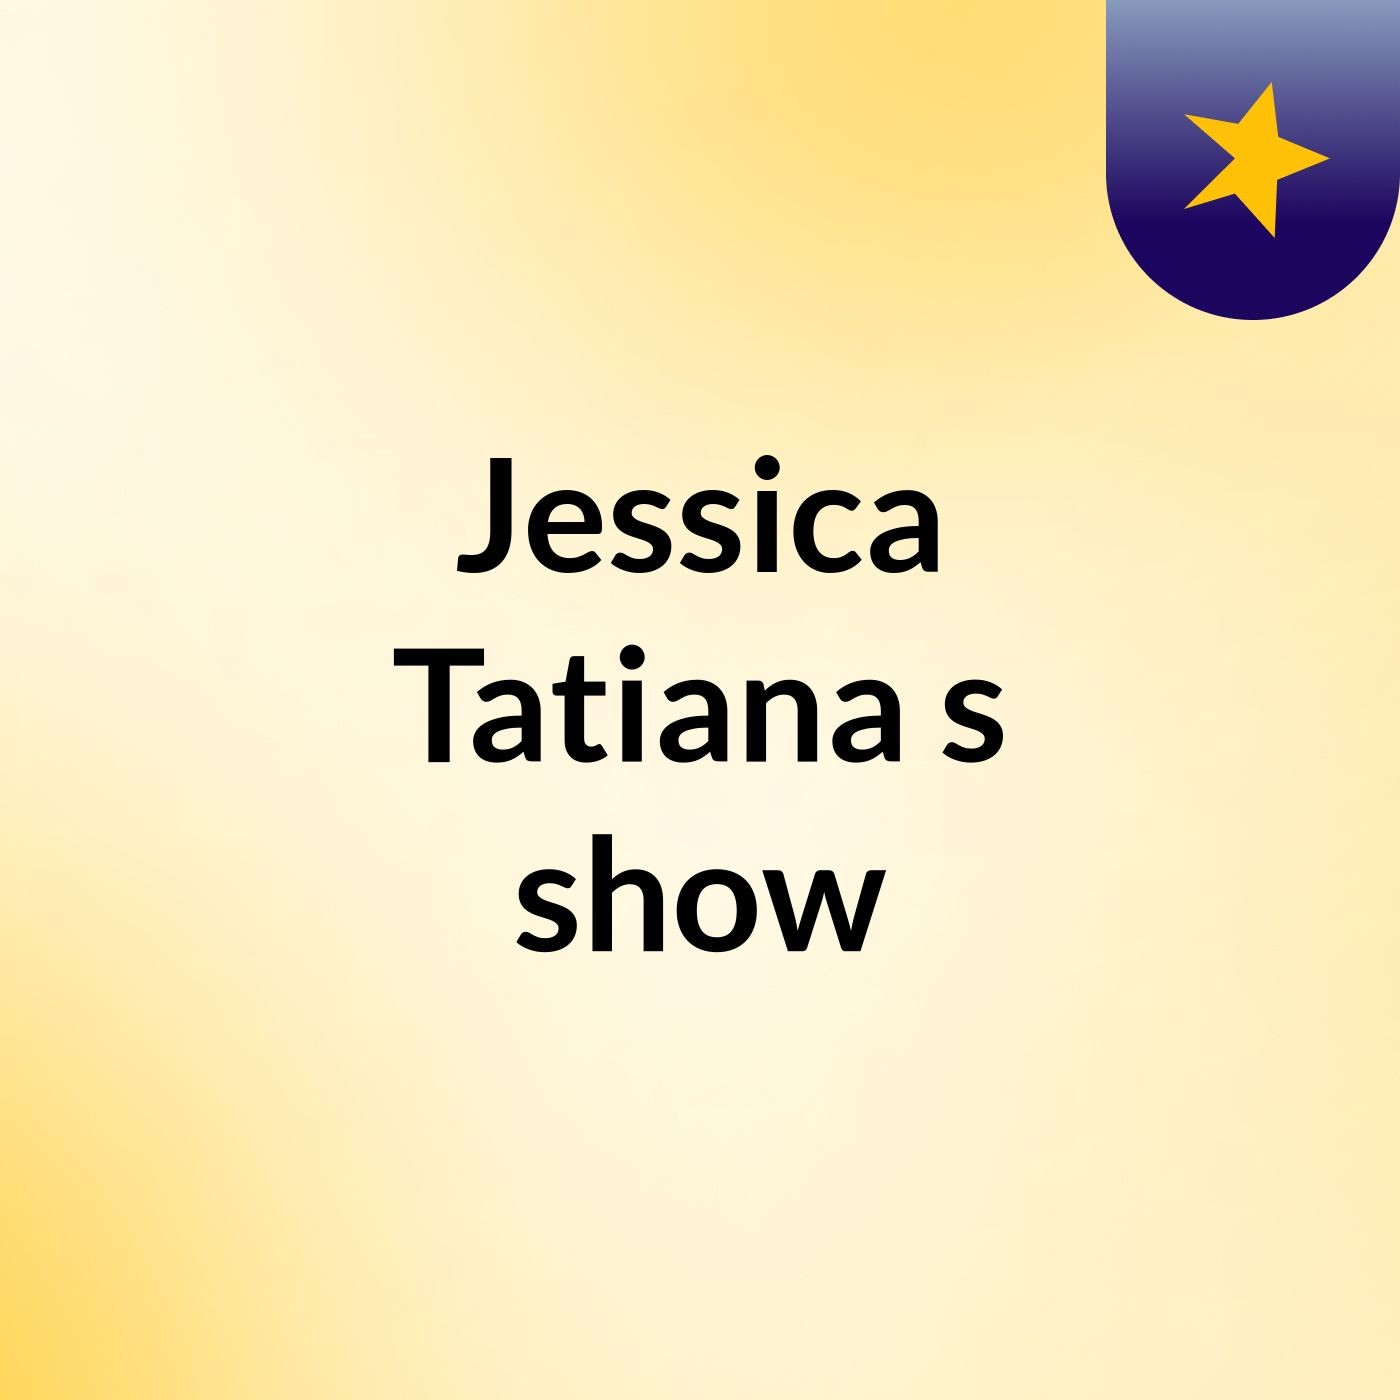 Jessica Tatiana's show